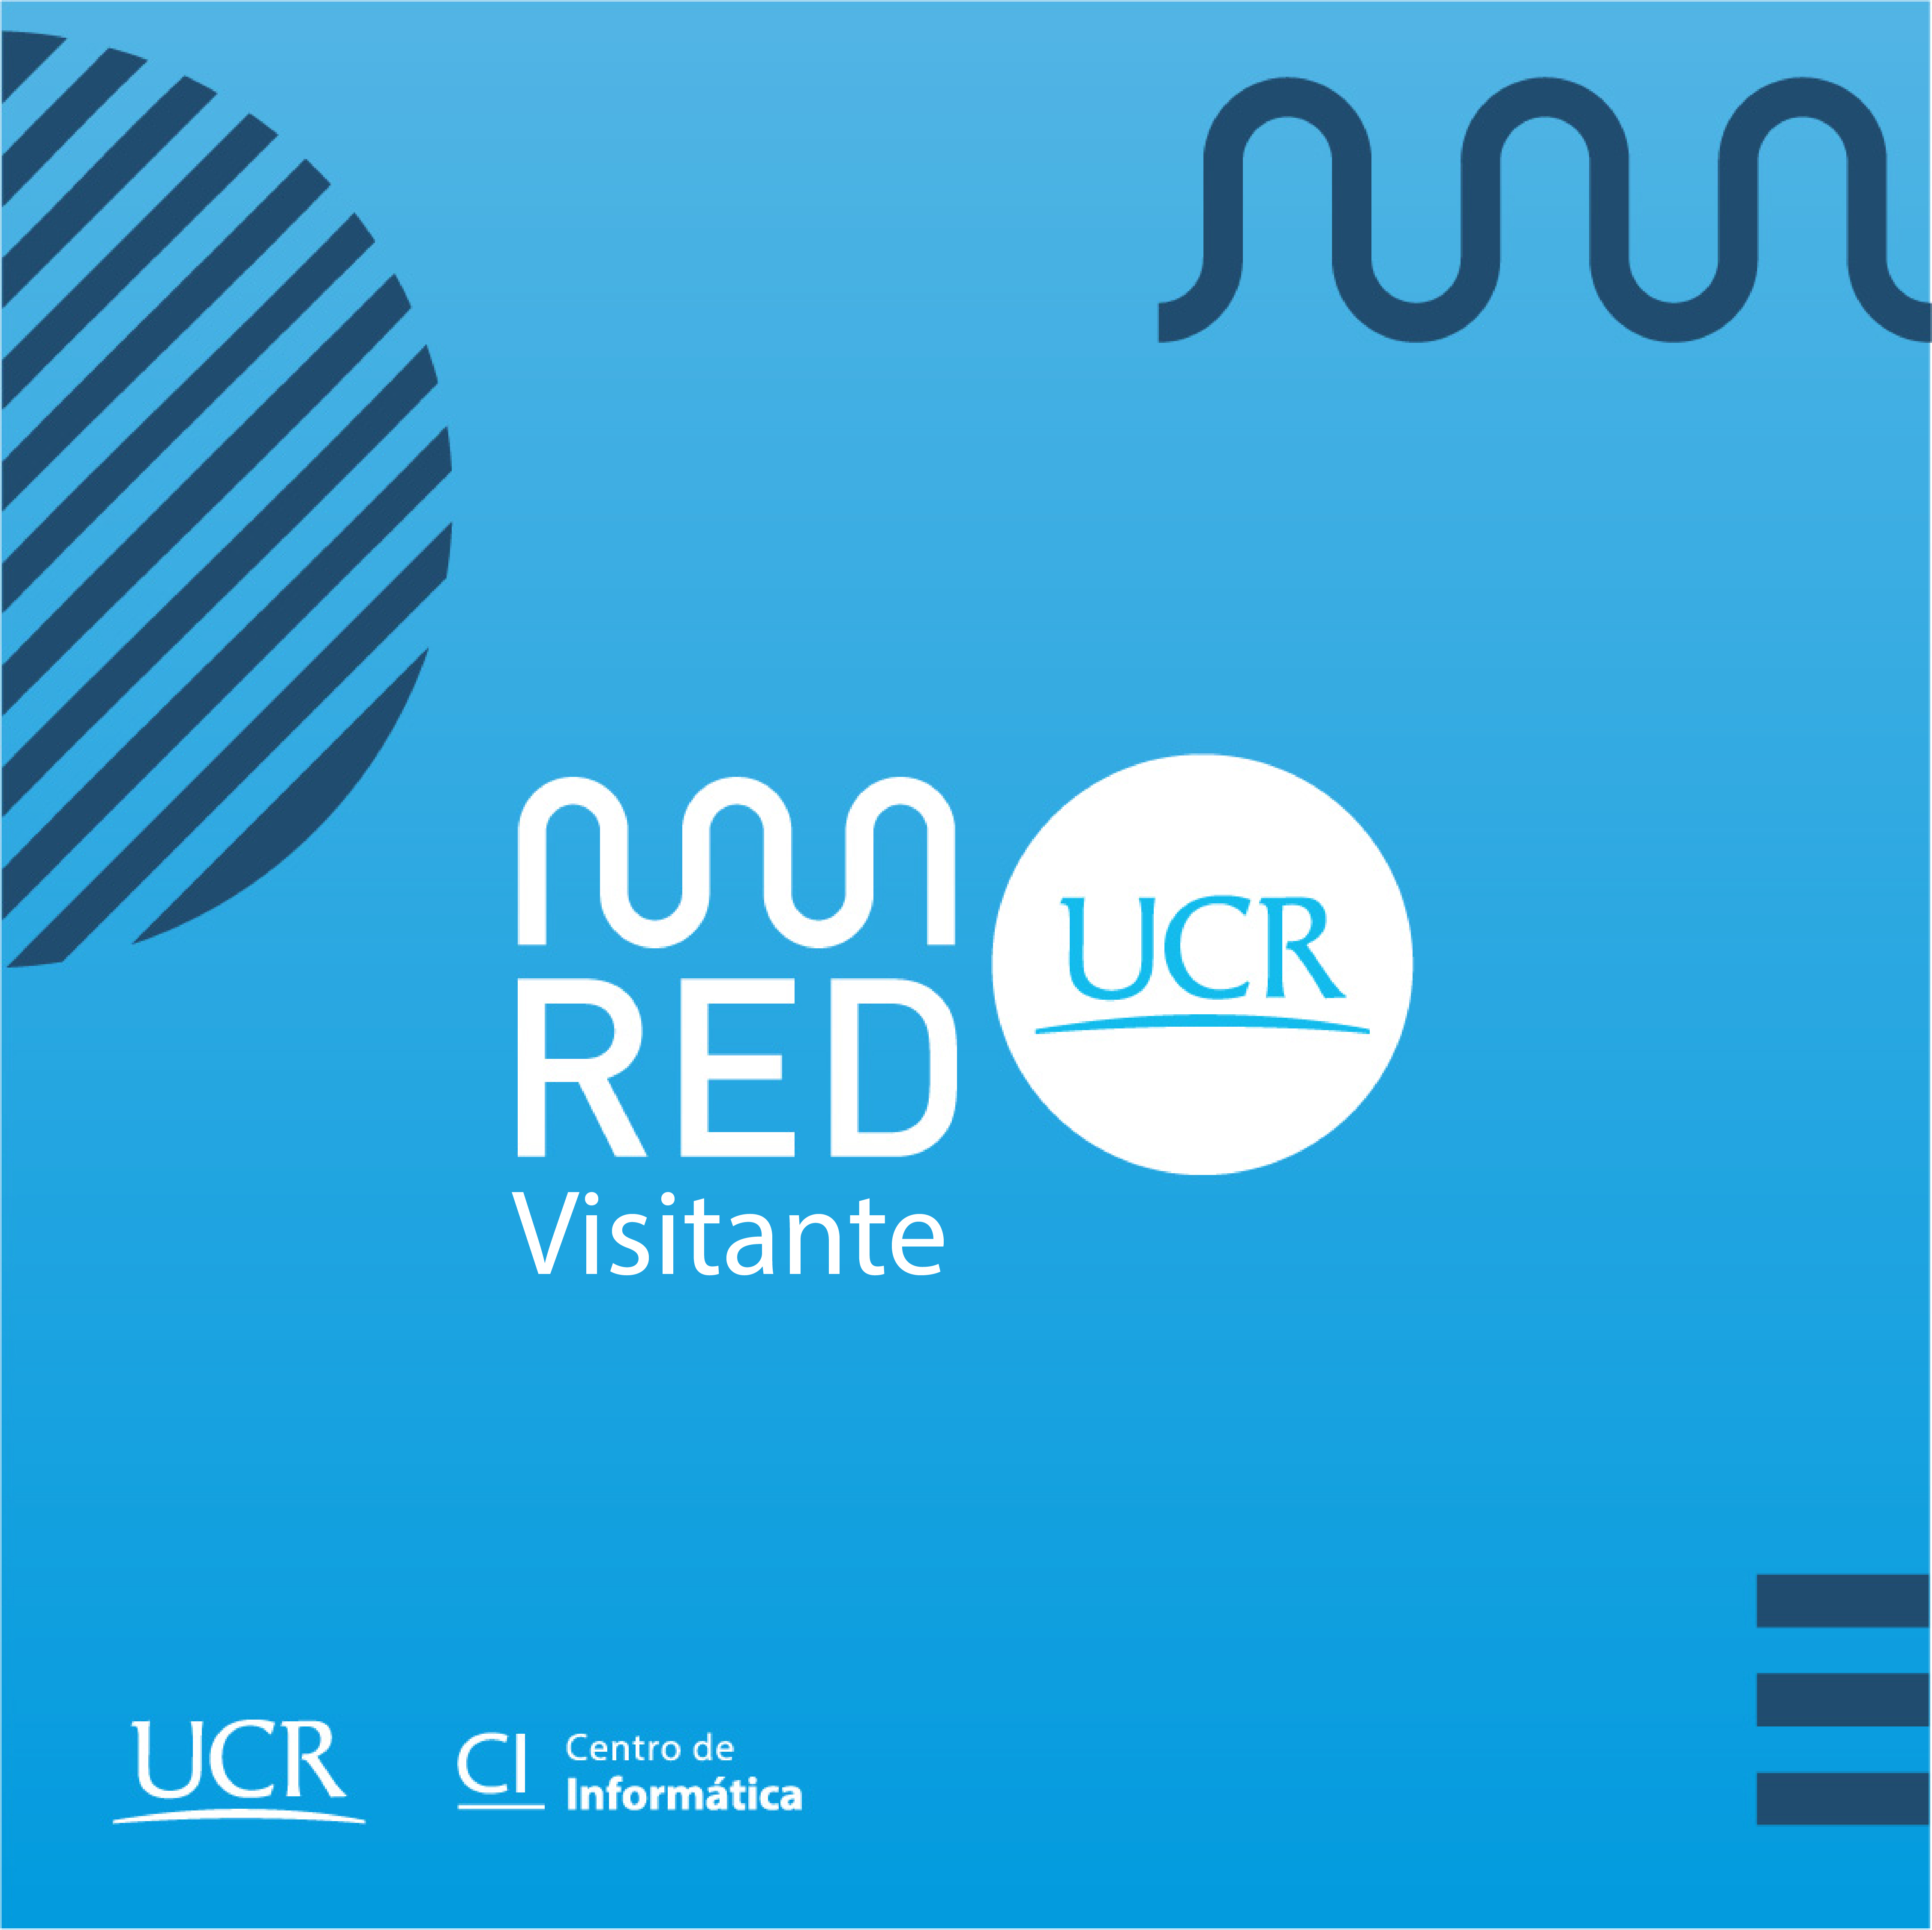 Red UCR Visitante